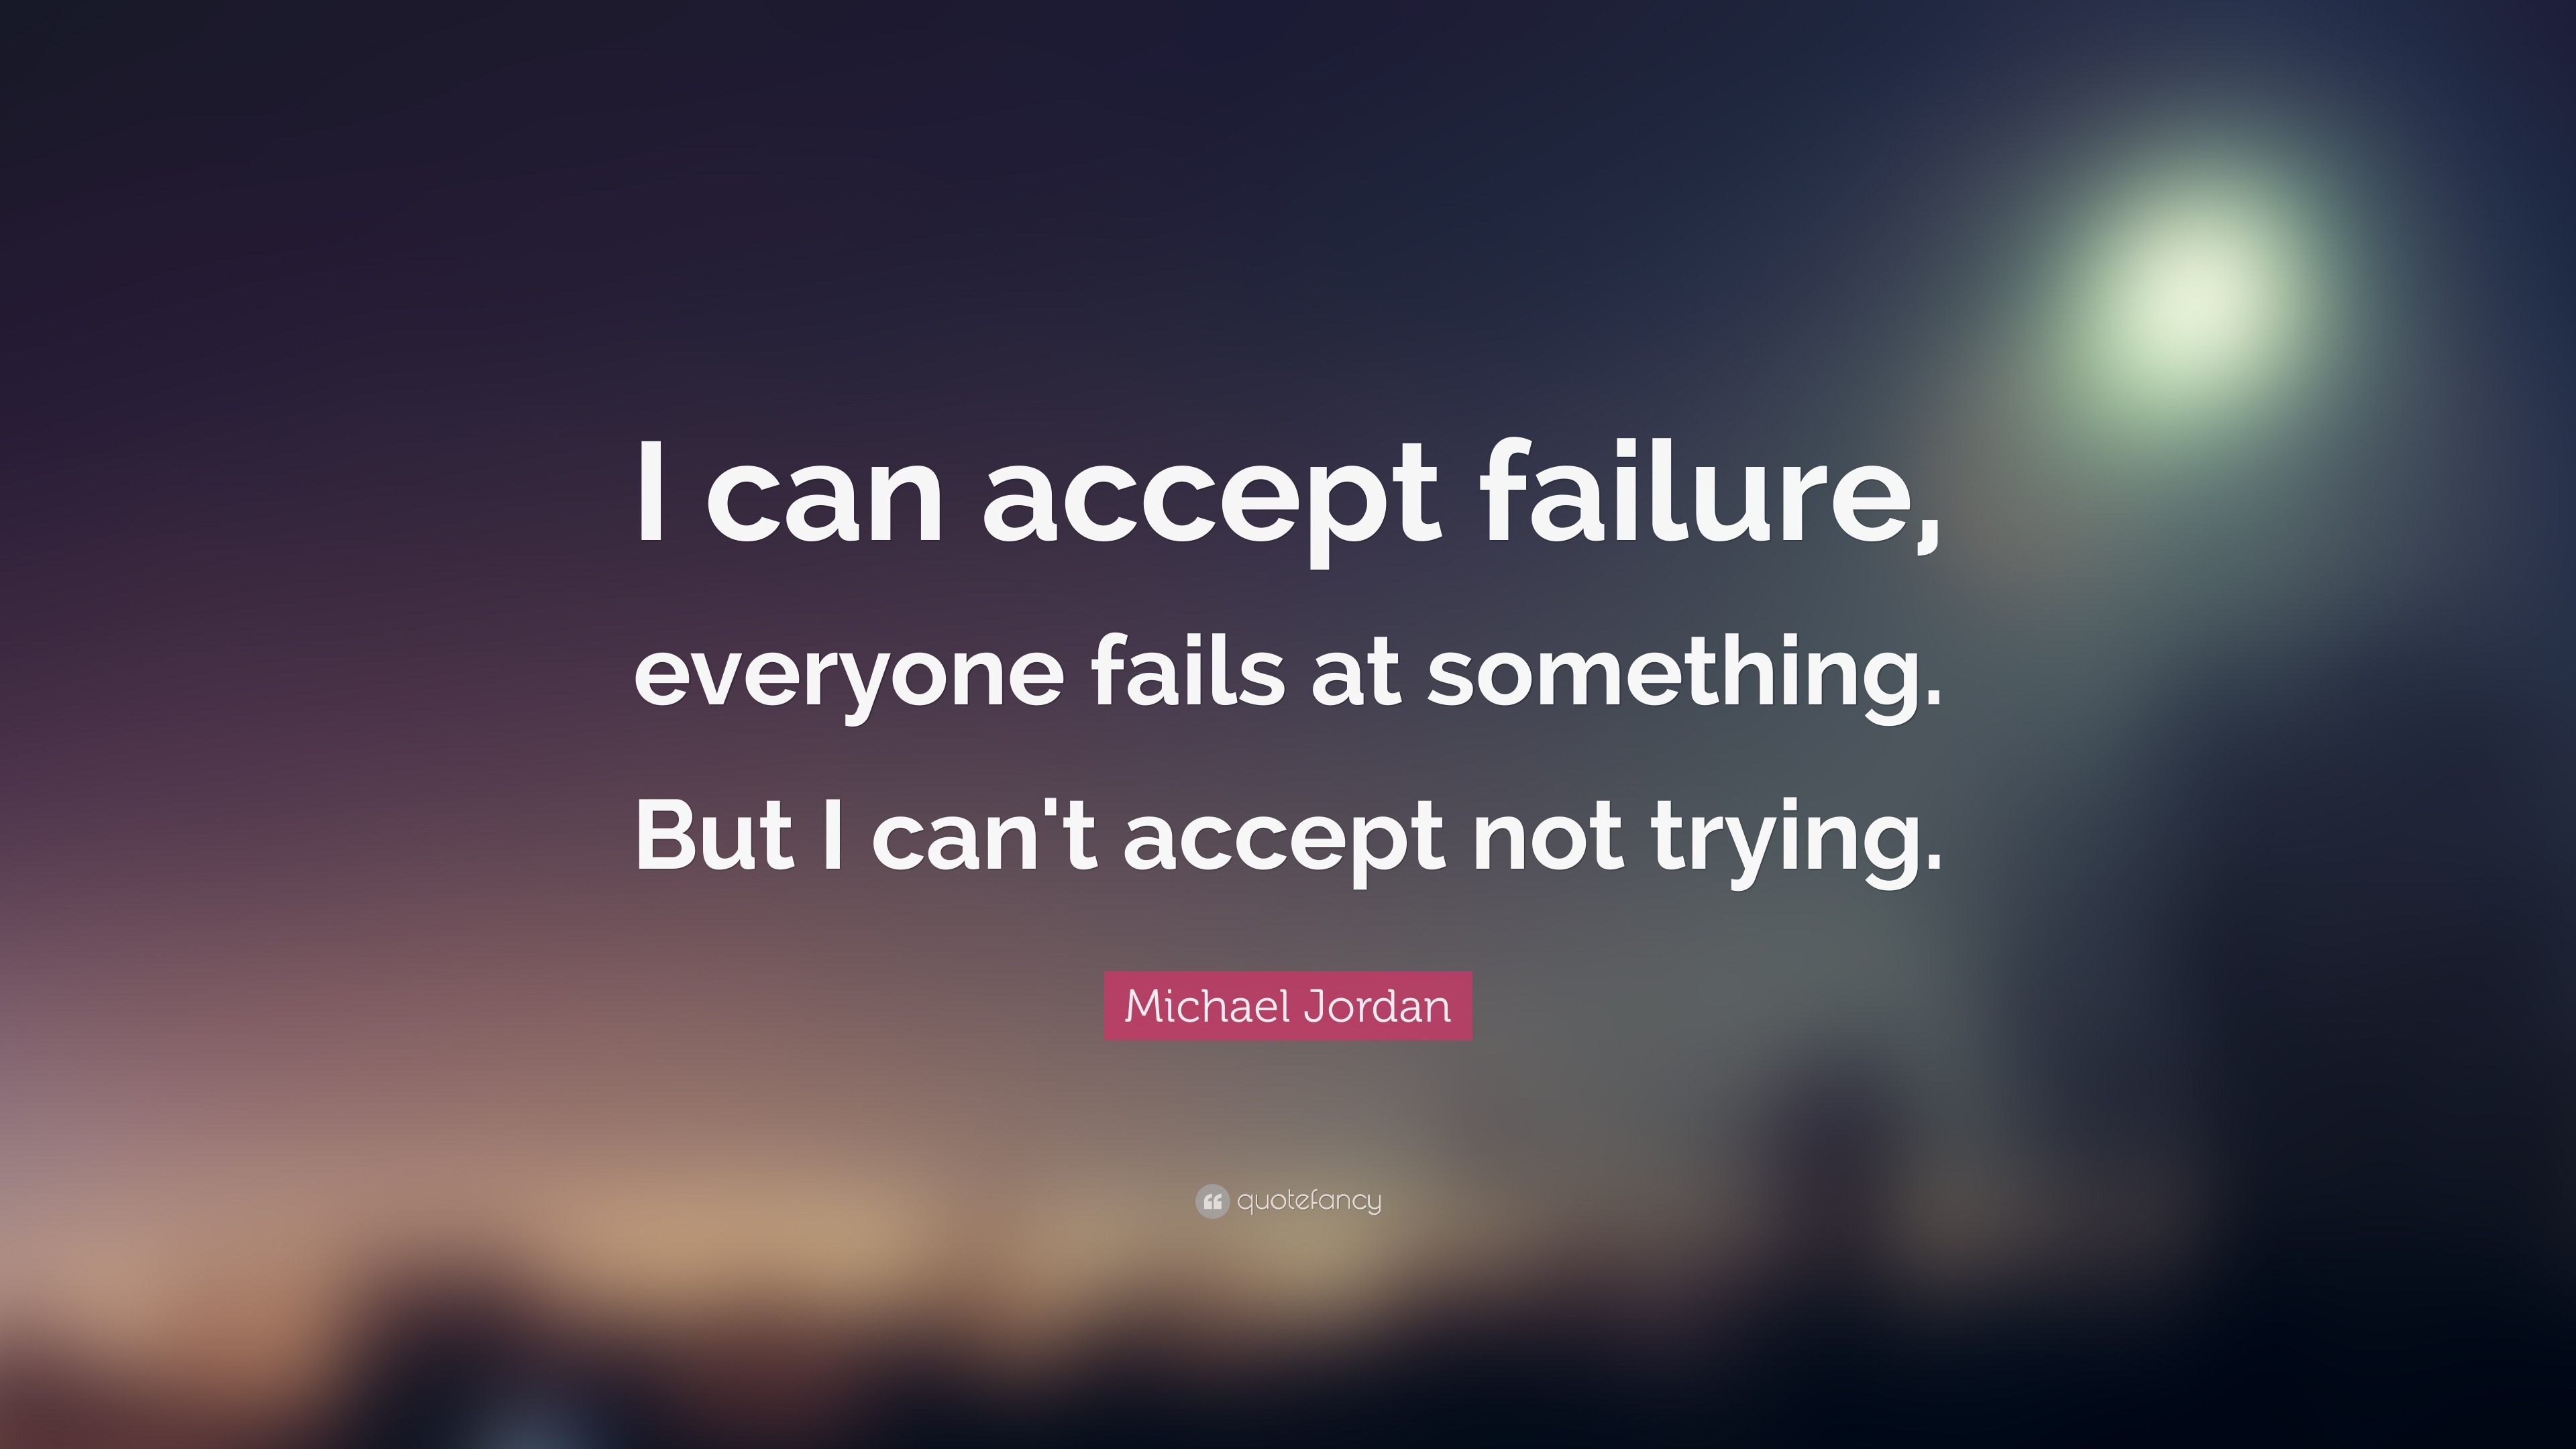 Michael Jordan Quote: “I can accept failure, everyone fails at